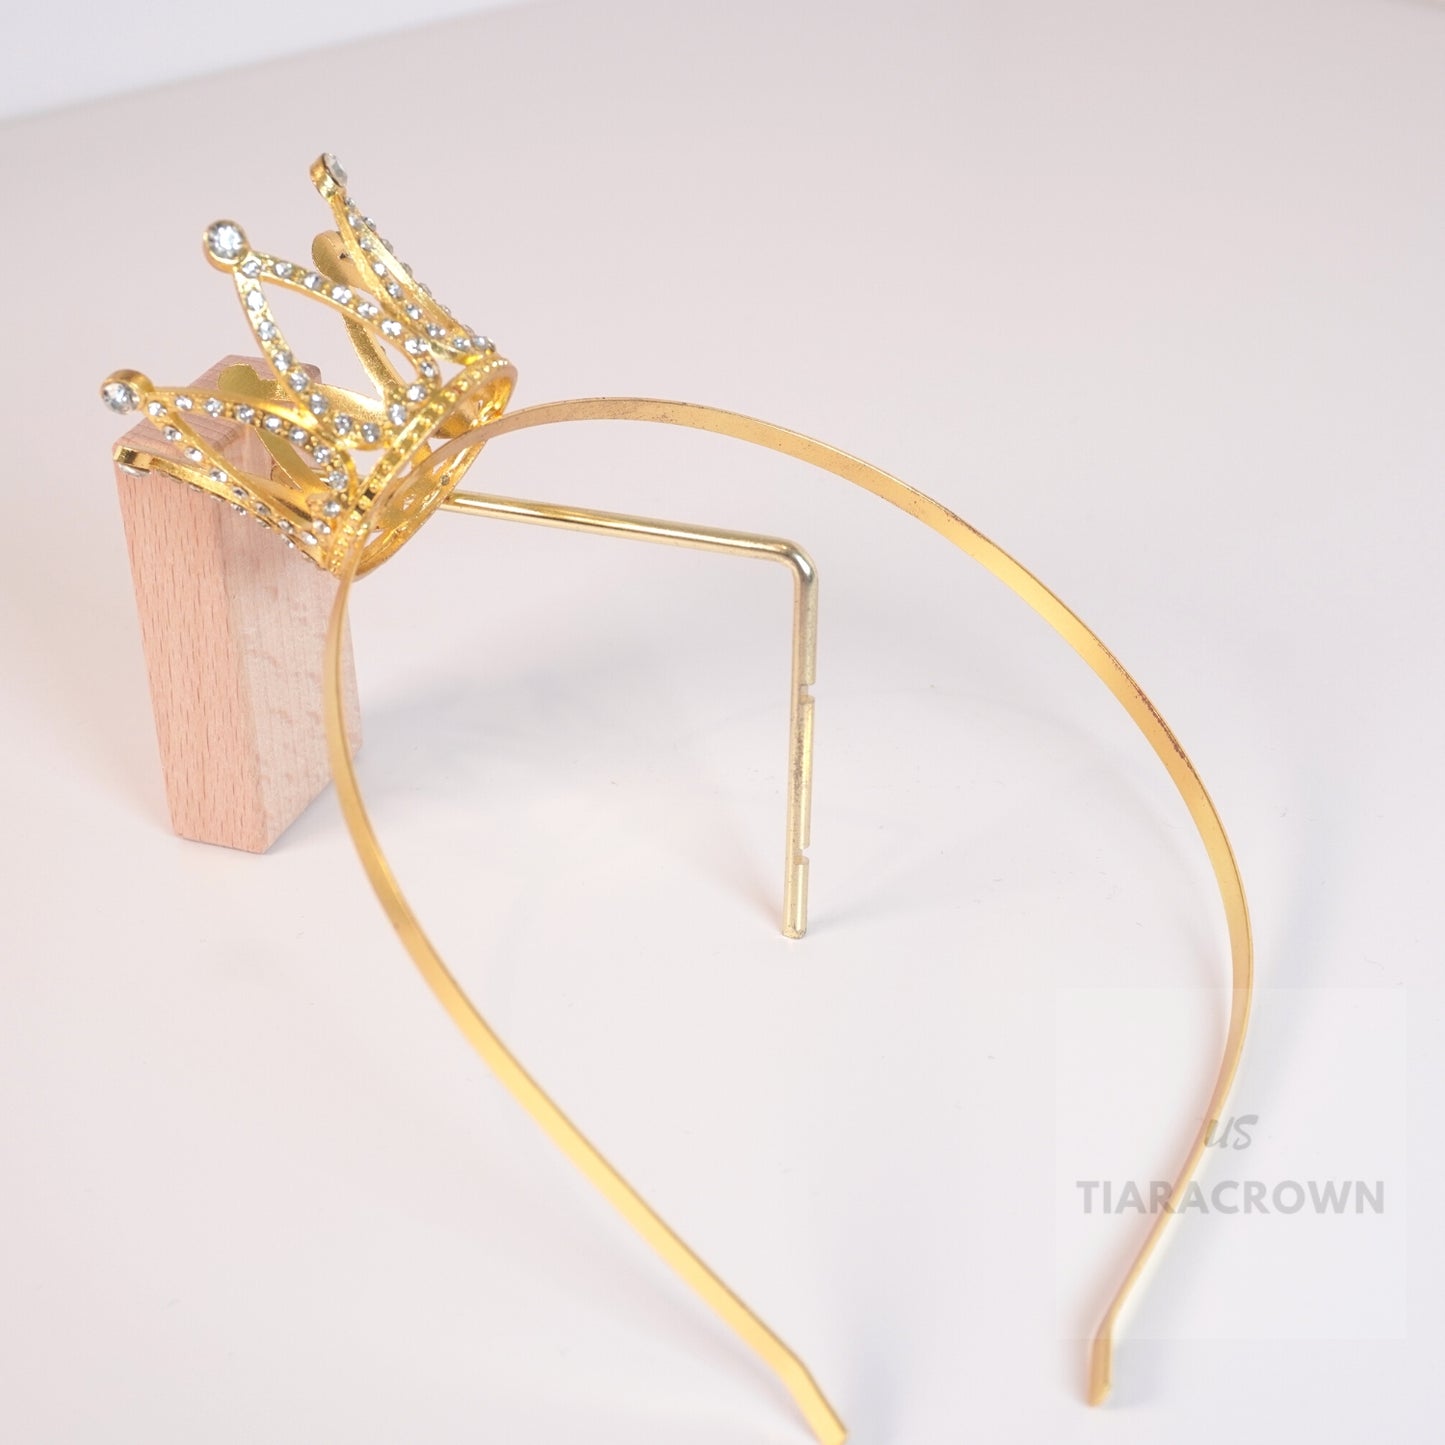 Kid Tiara Crowns Crystal Headband Princess Rhinestone Crown Bridal Wedding Prom Birthday Party Hair Accessories Jewelry